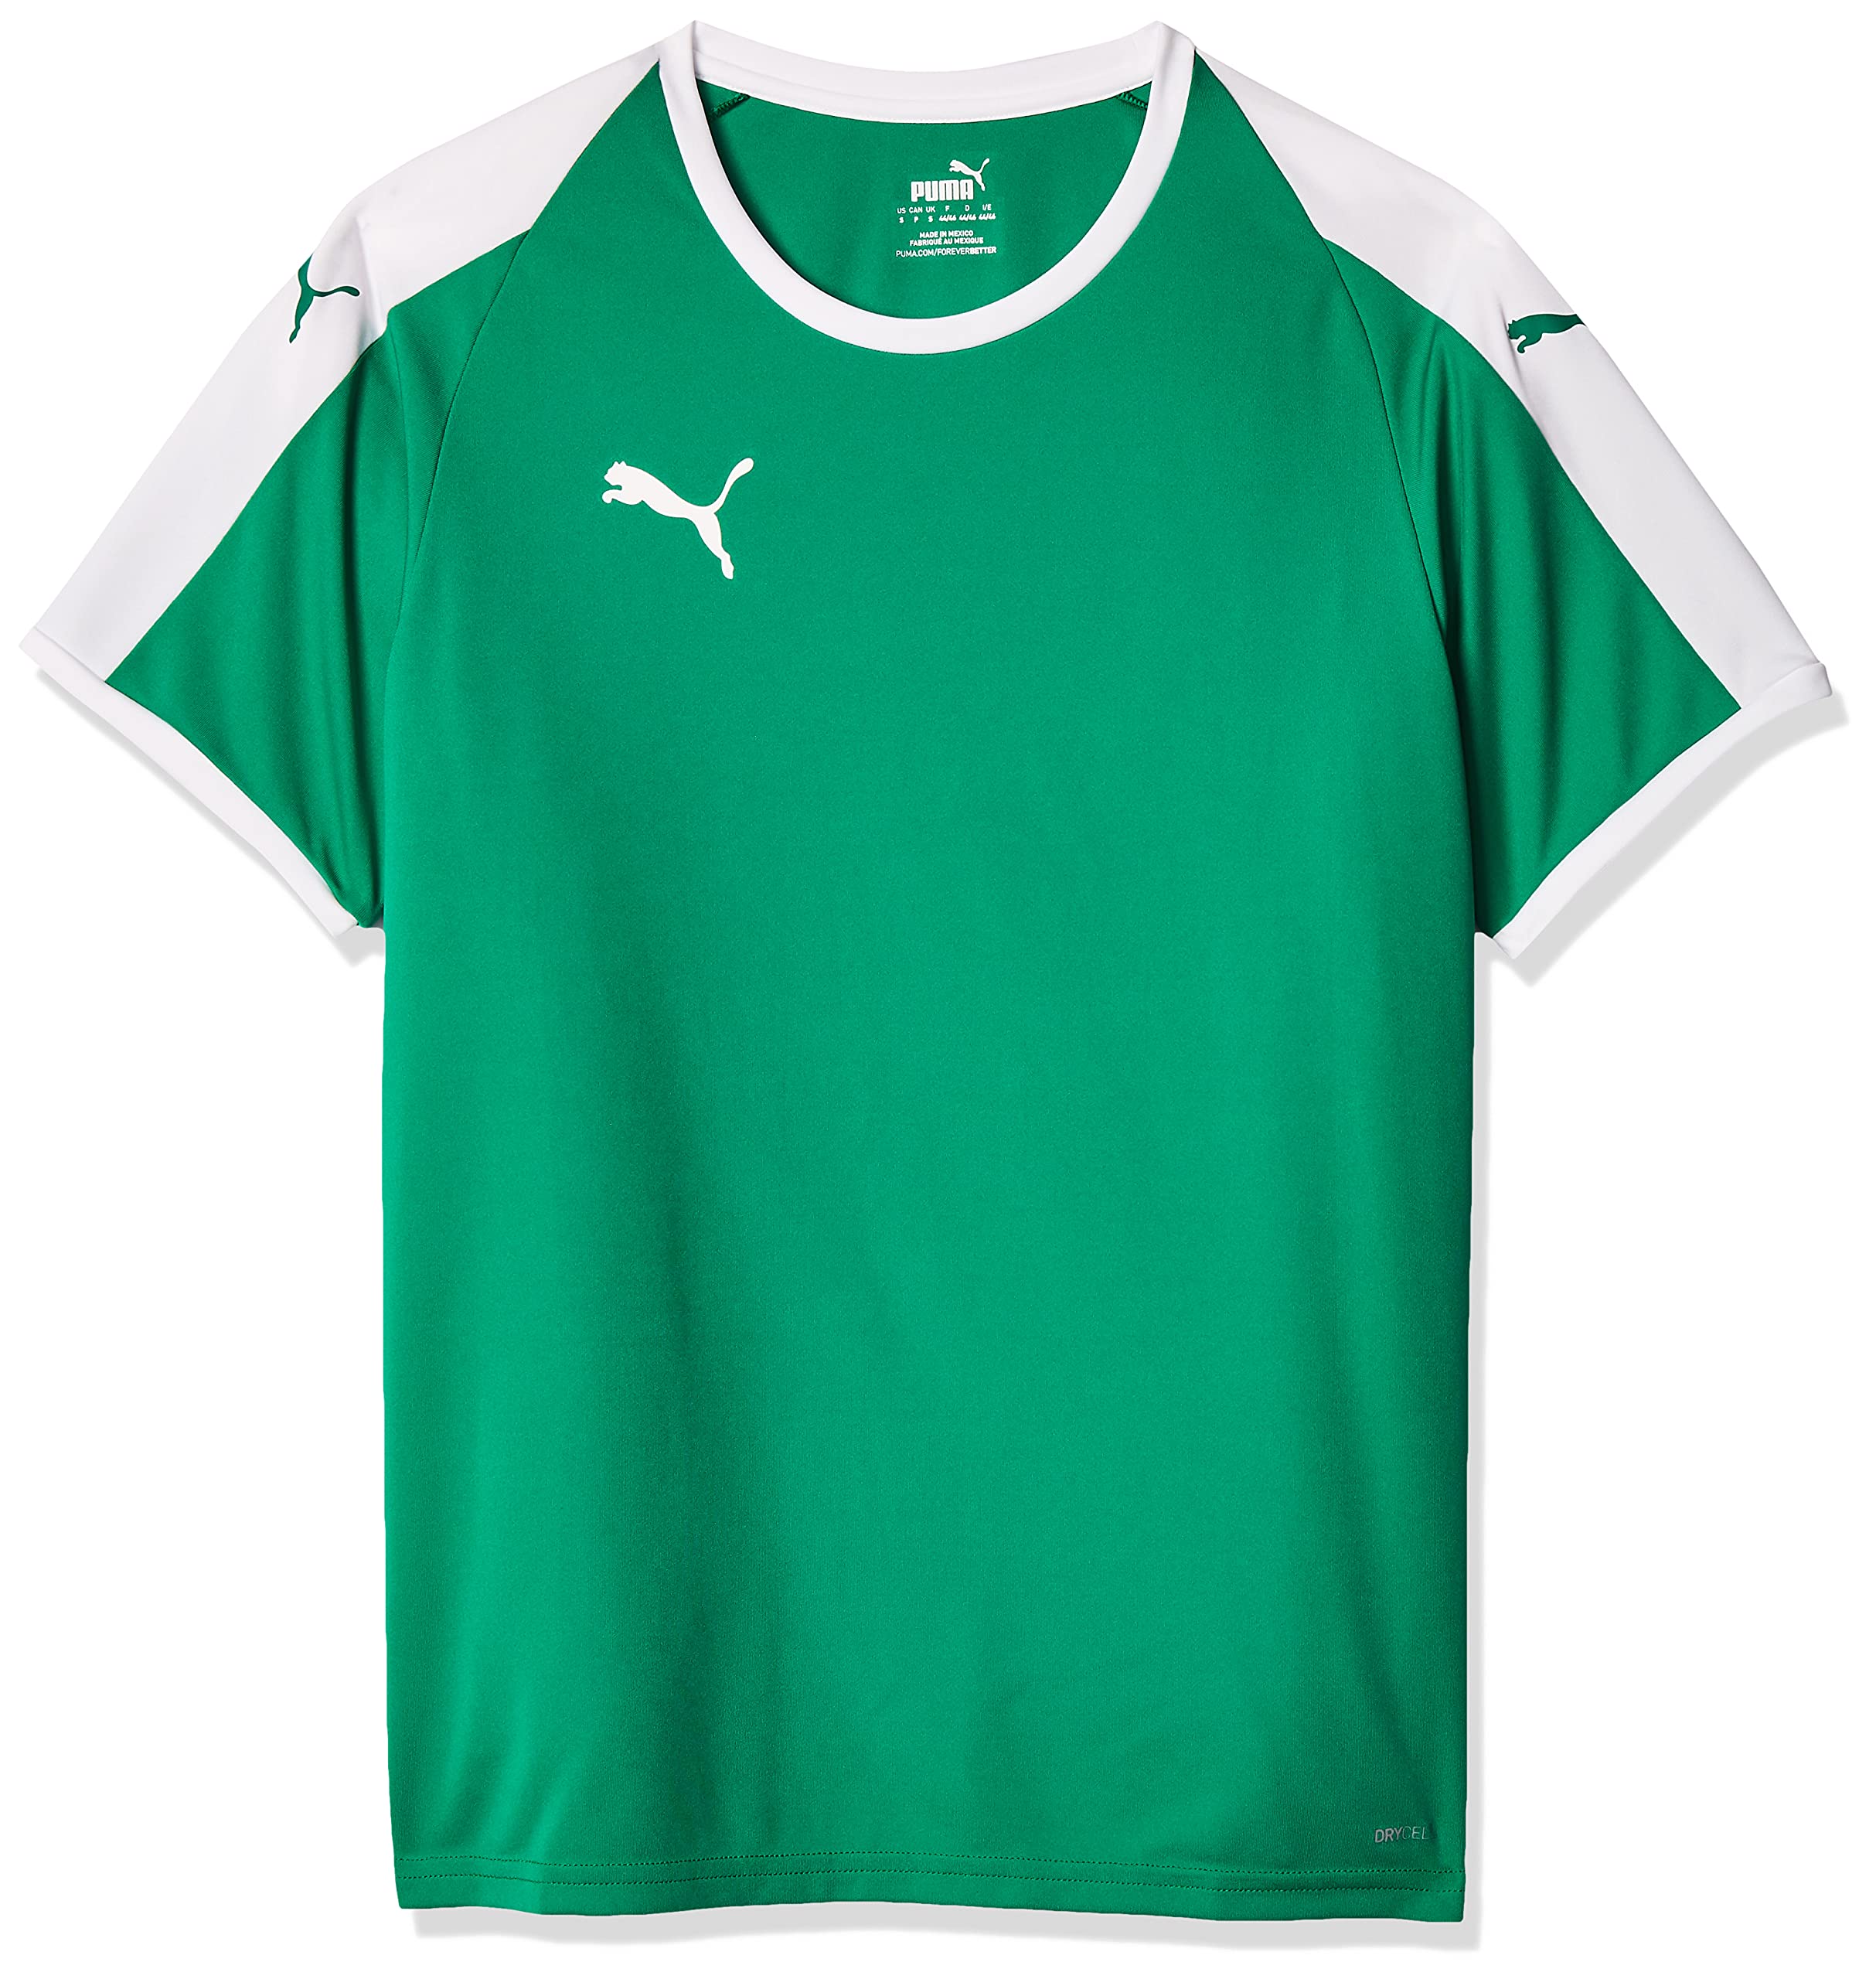 PUMA Mens Liga Jersey - Pepper Green/White - Large - image 1 of 4